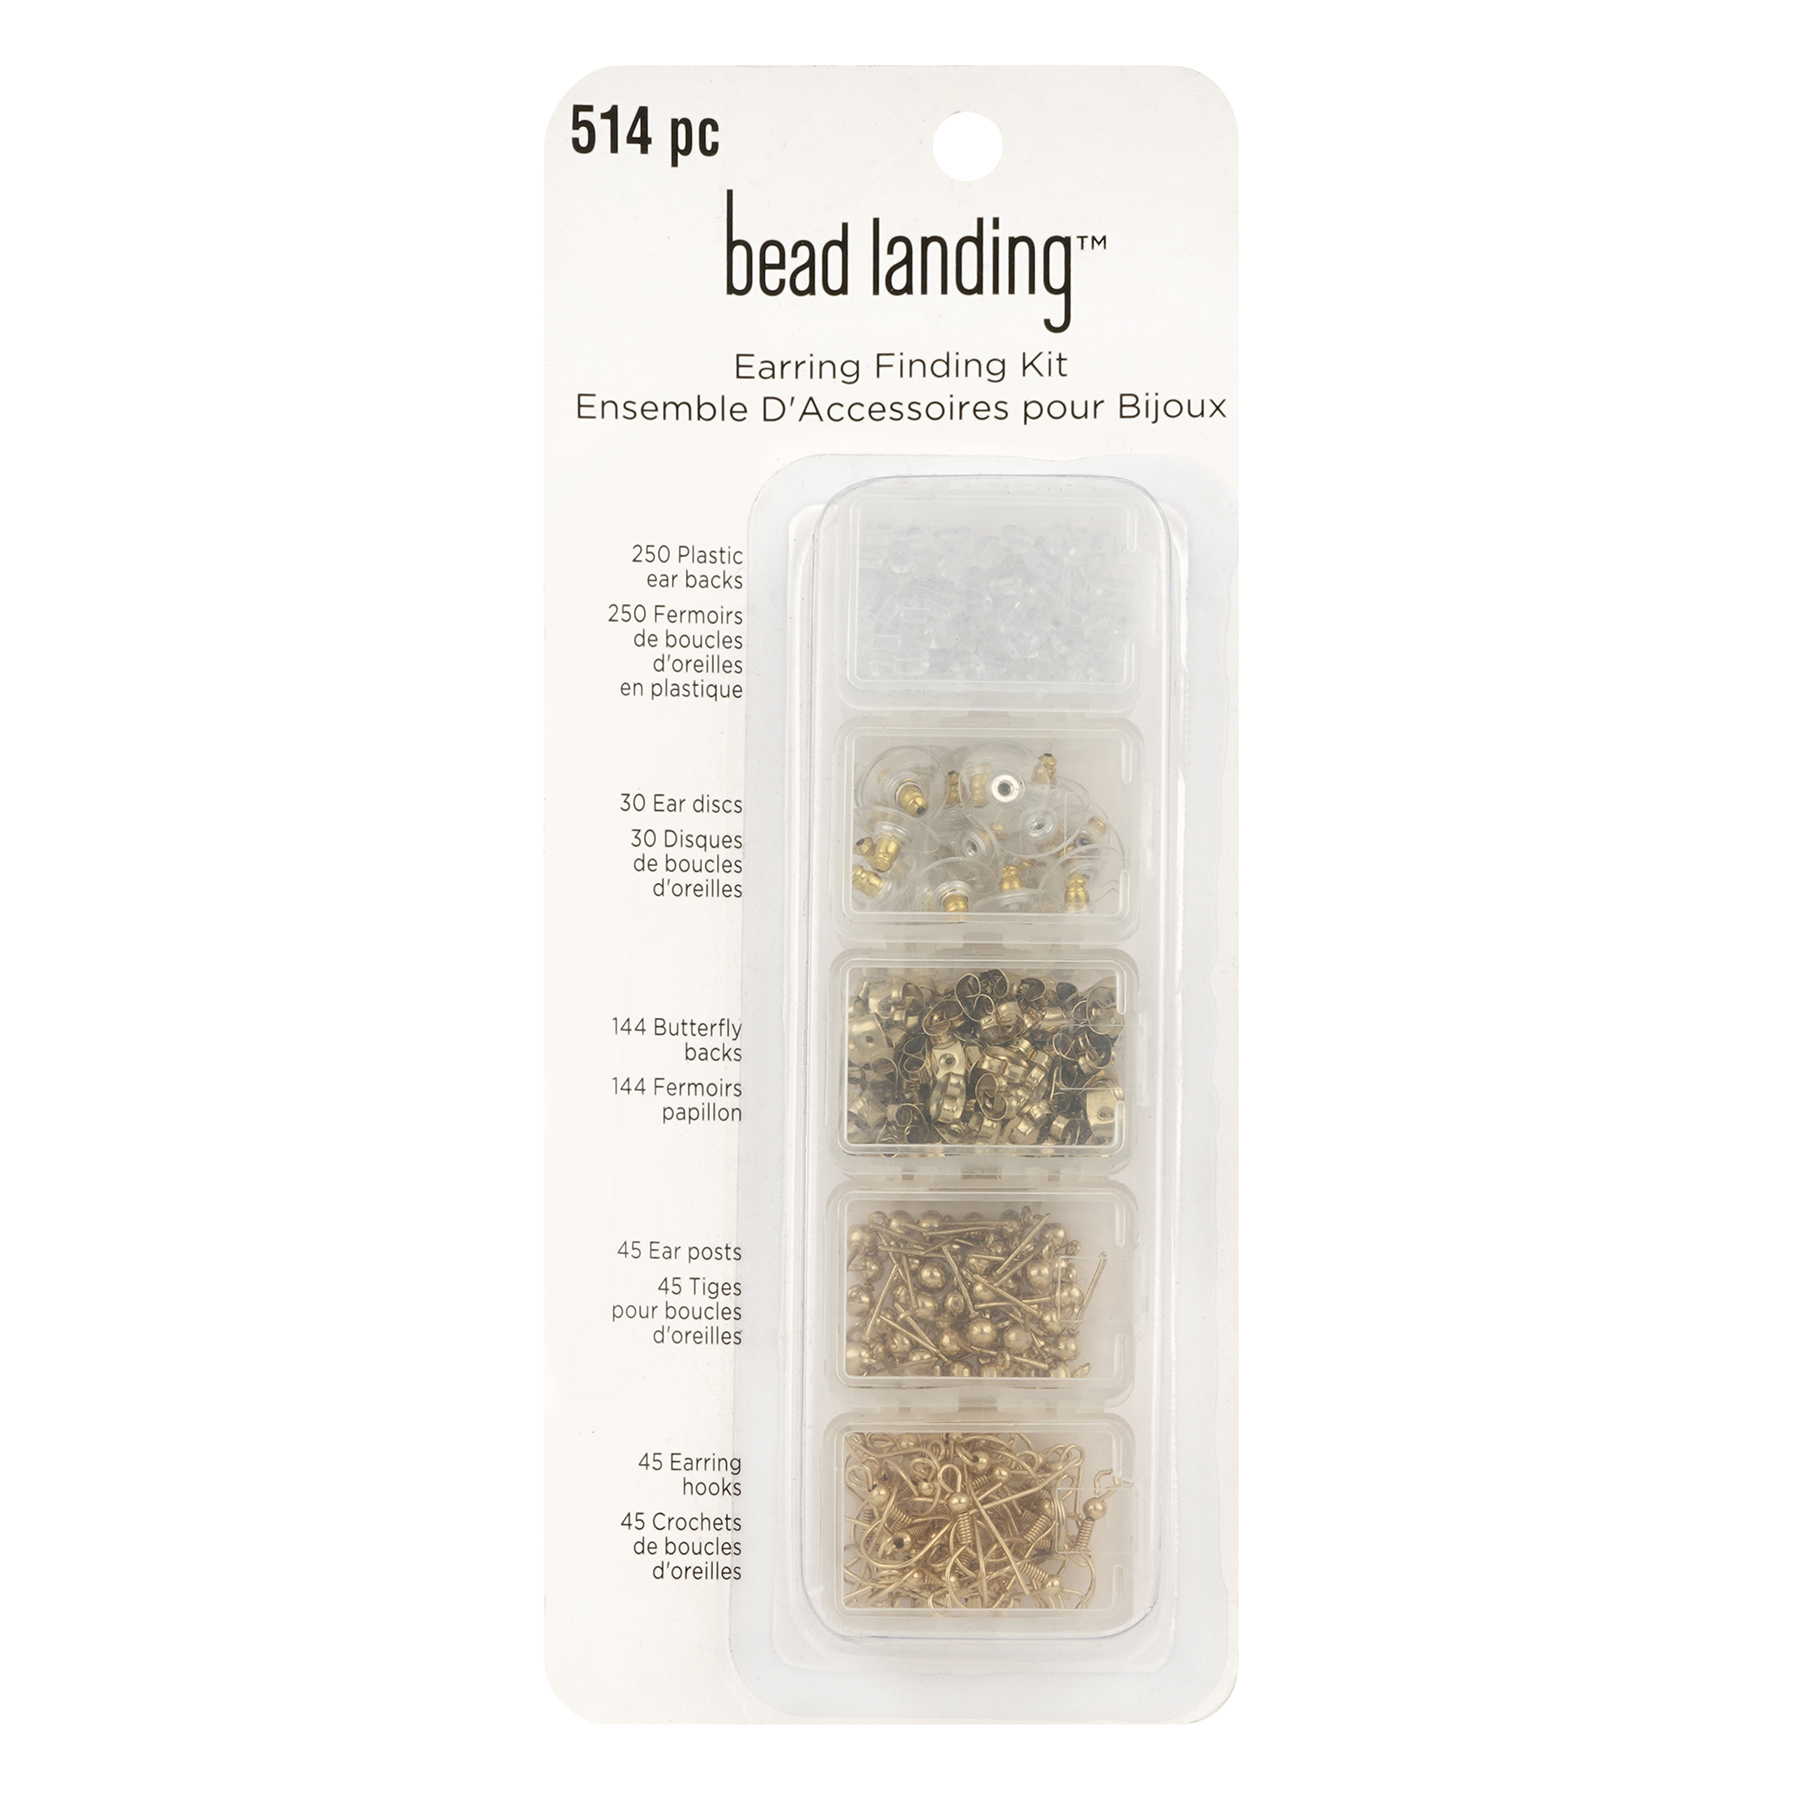 Earring Finding Kit by Bead Landing in Gold | Michaels